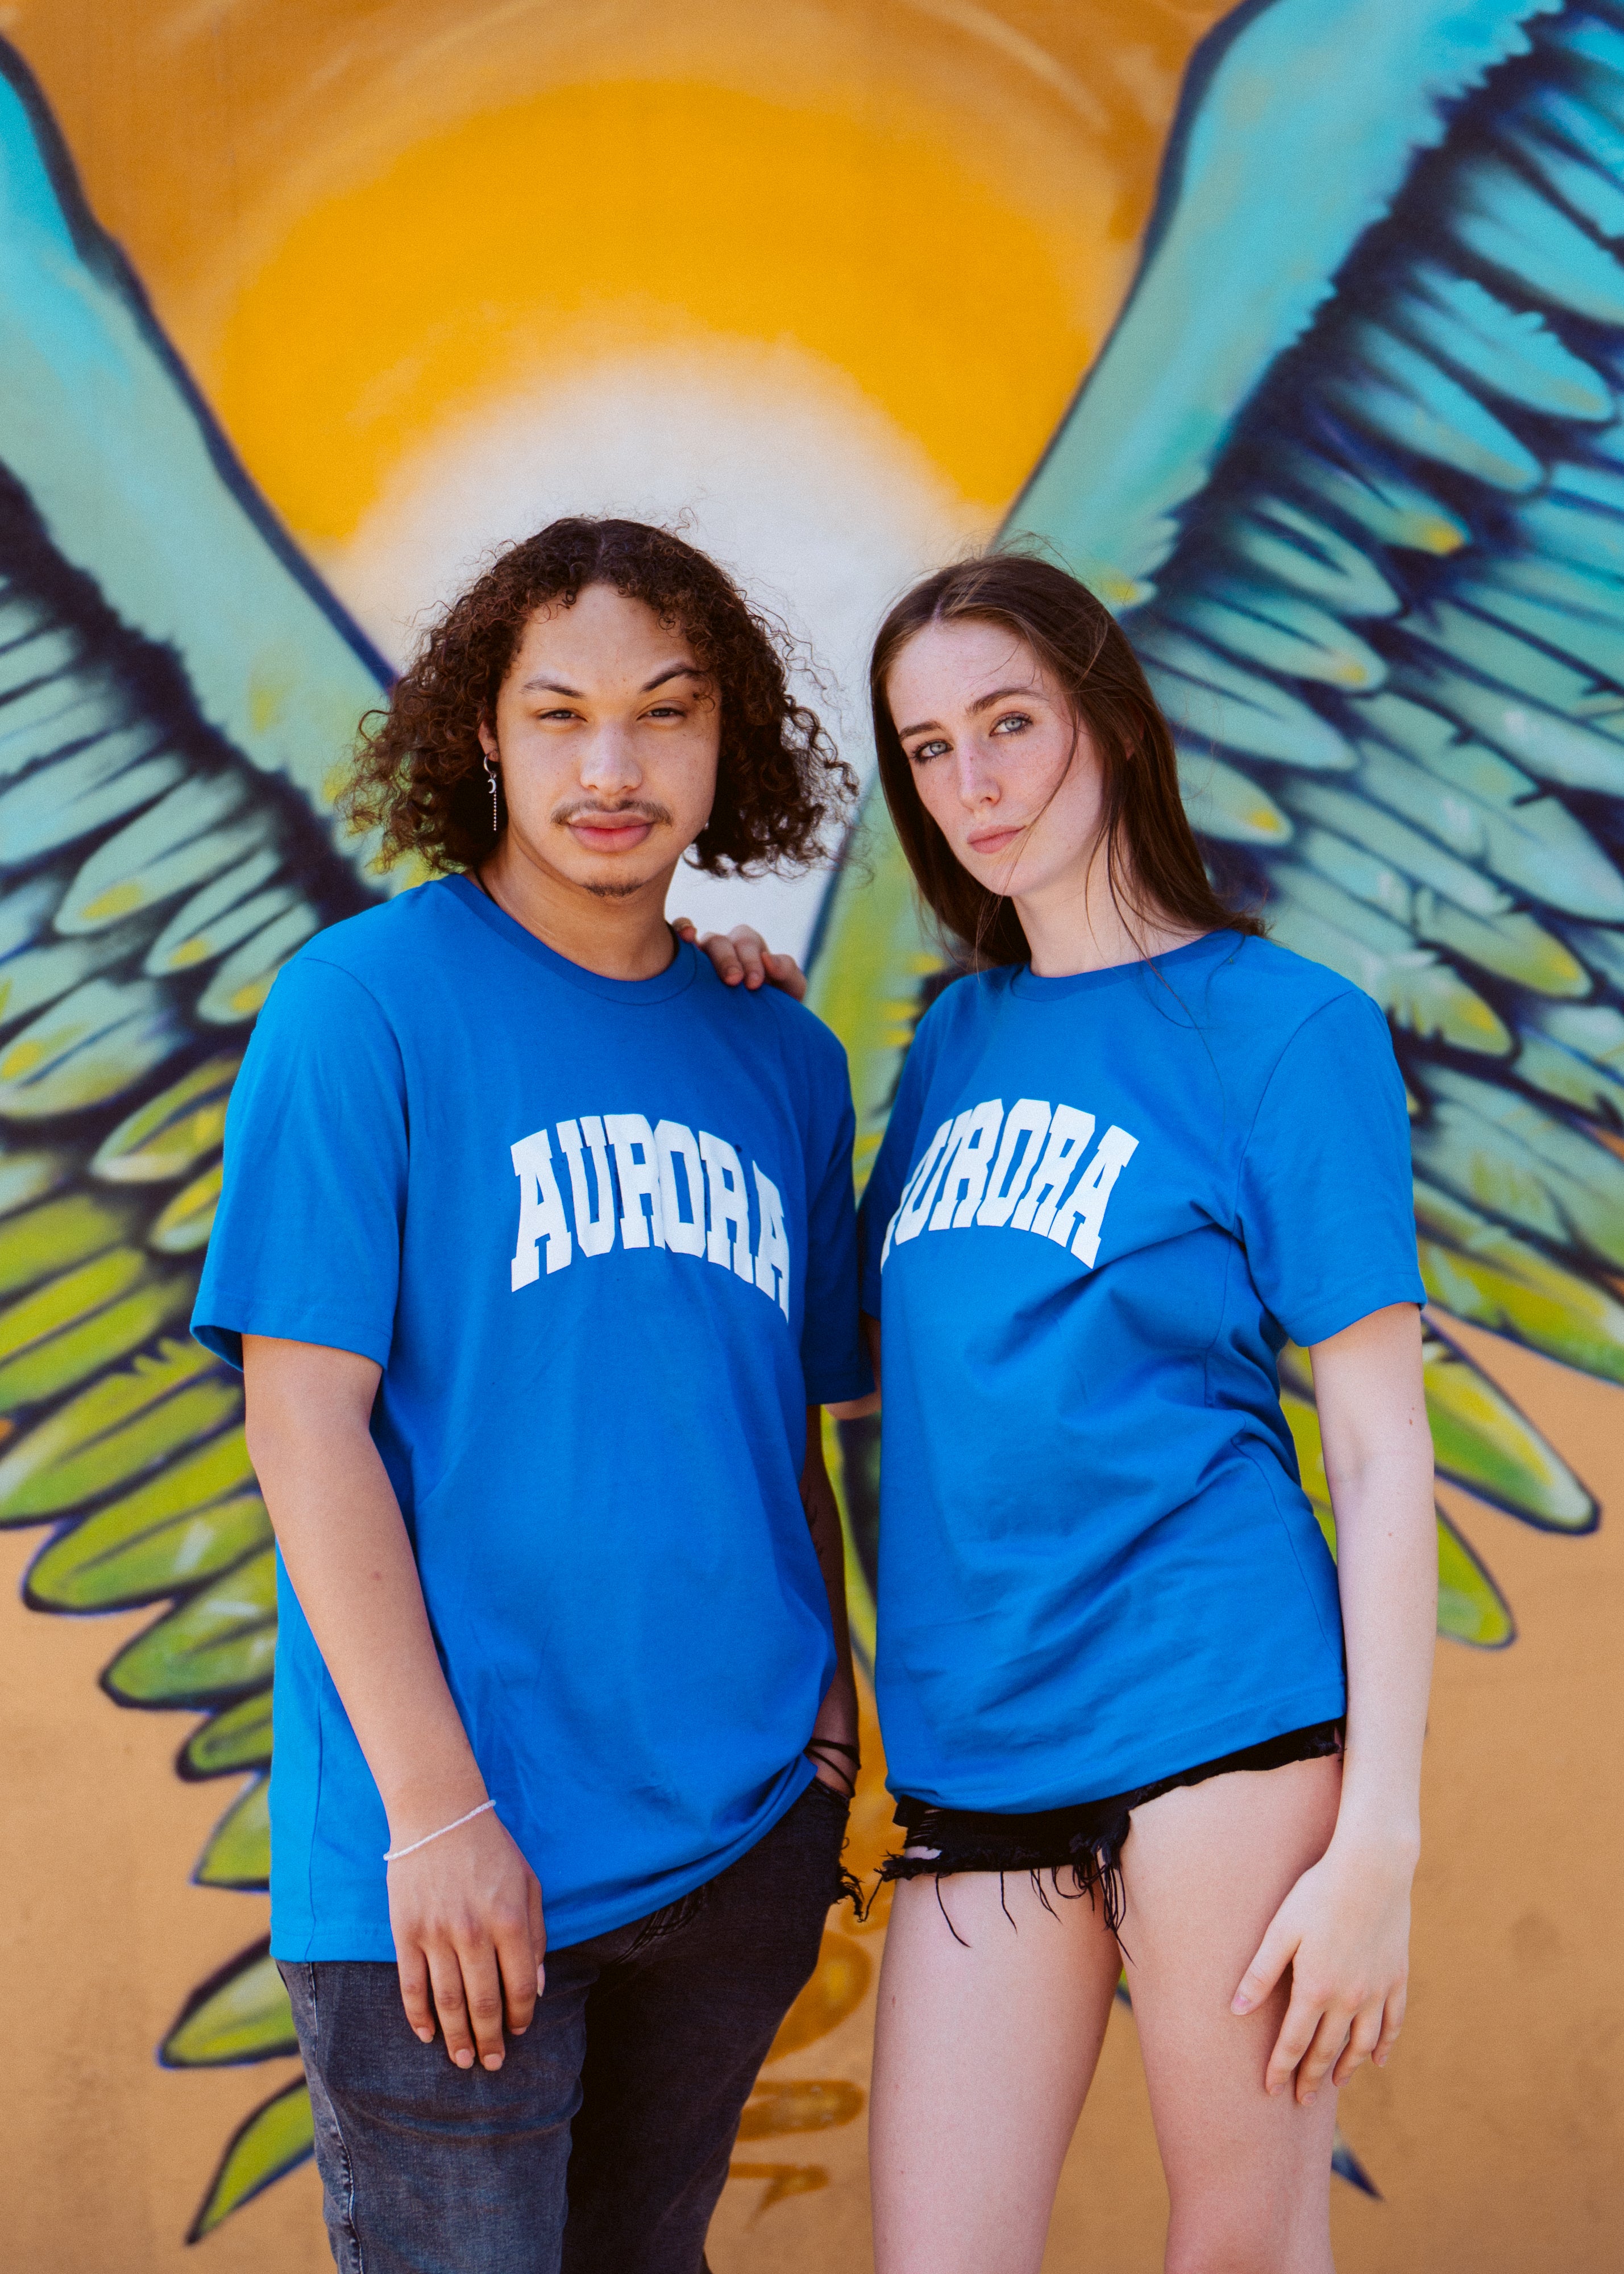 Royal Blue Aurora Unity Tee - Culturally Rich & Positive Energy Community Shirt